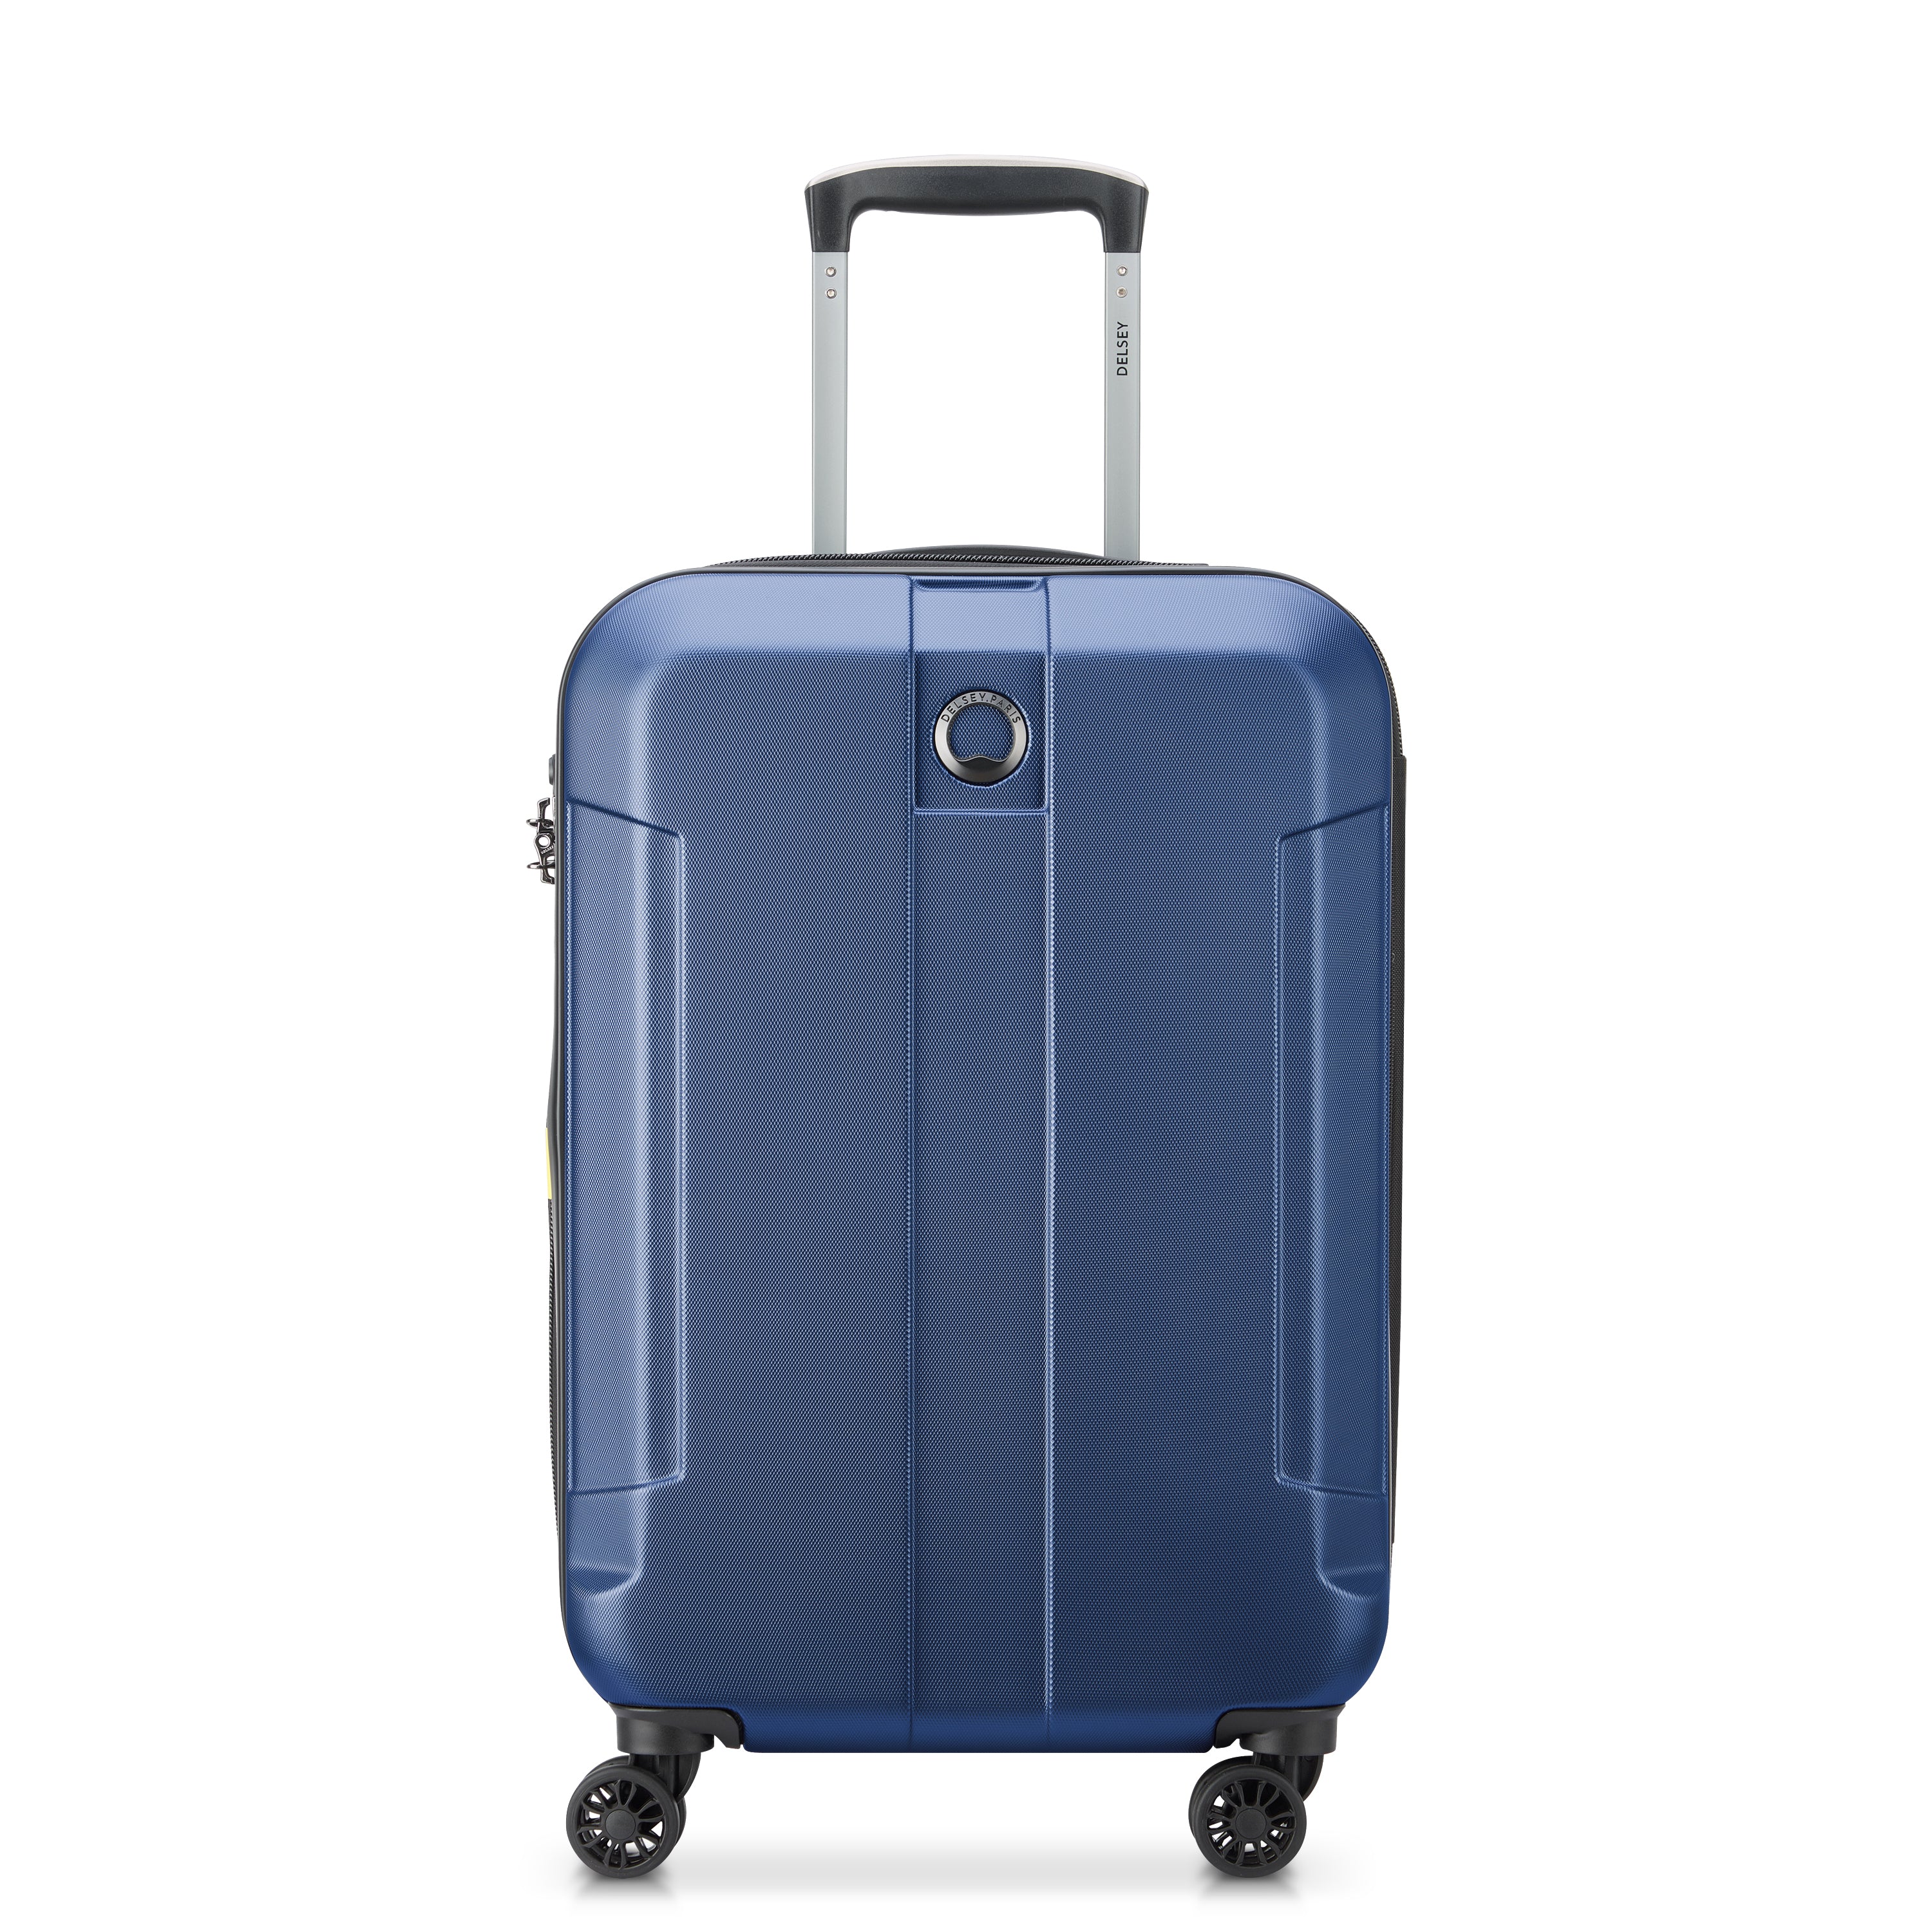 Delsey Depart Hard 61cm Hardcase Expandable 4 Double Wheel Cabin Luggage Trolley Case Grey - 00314580522 X9 